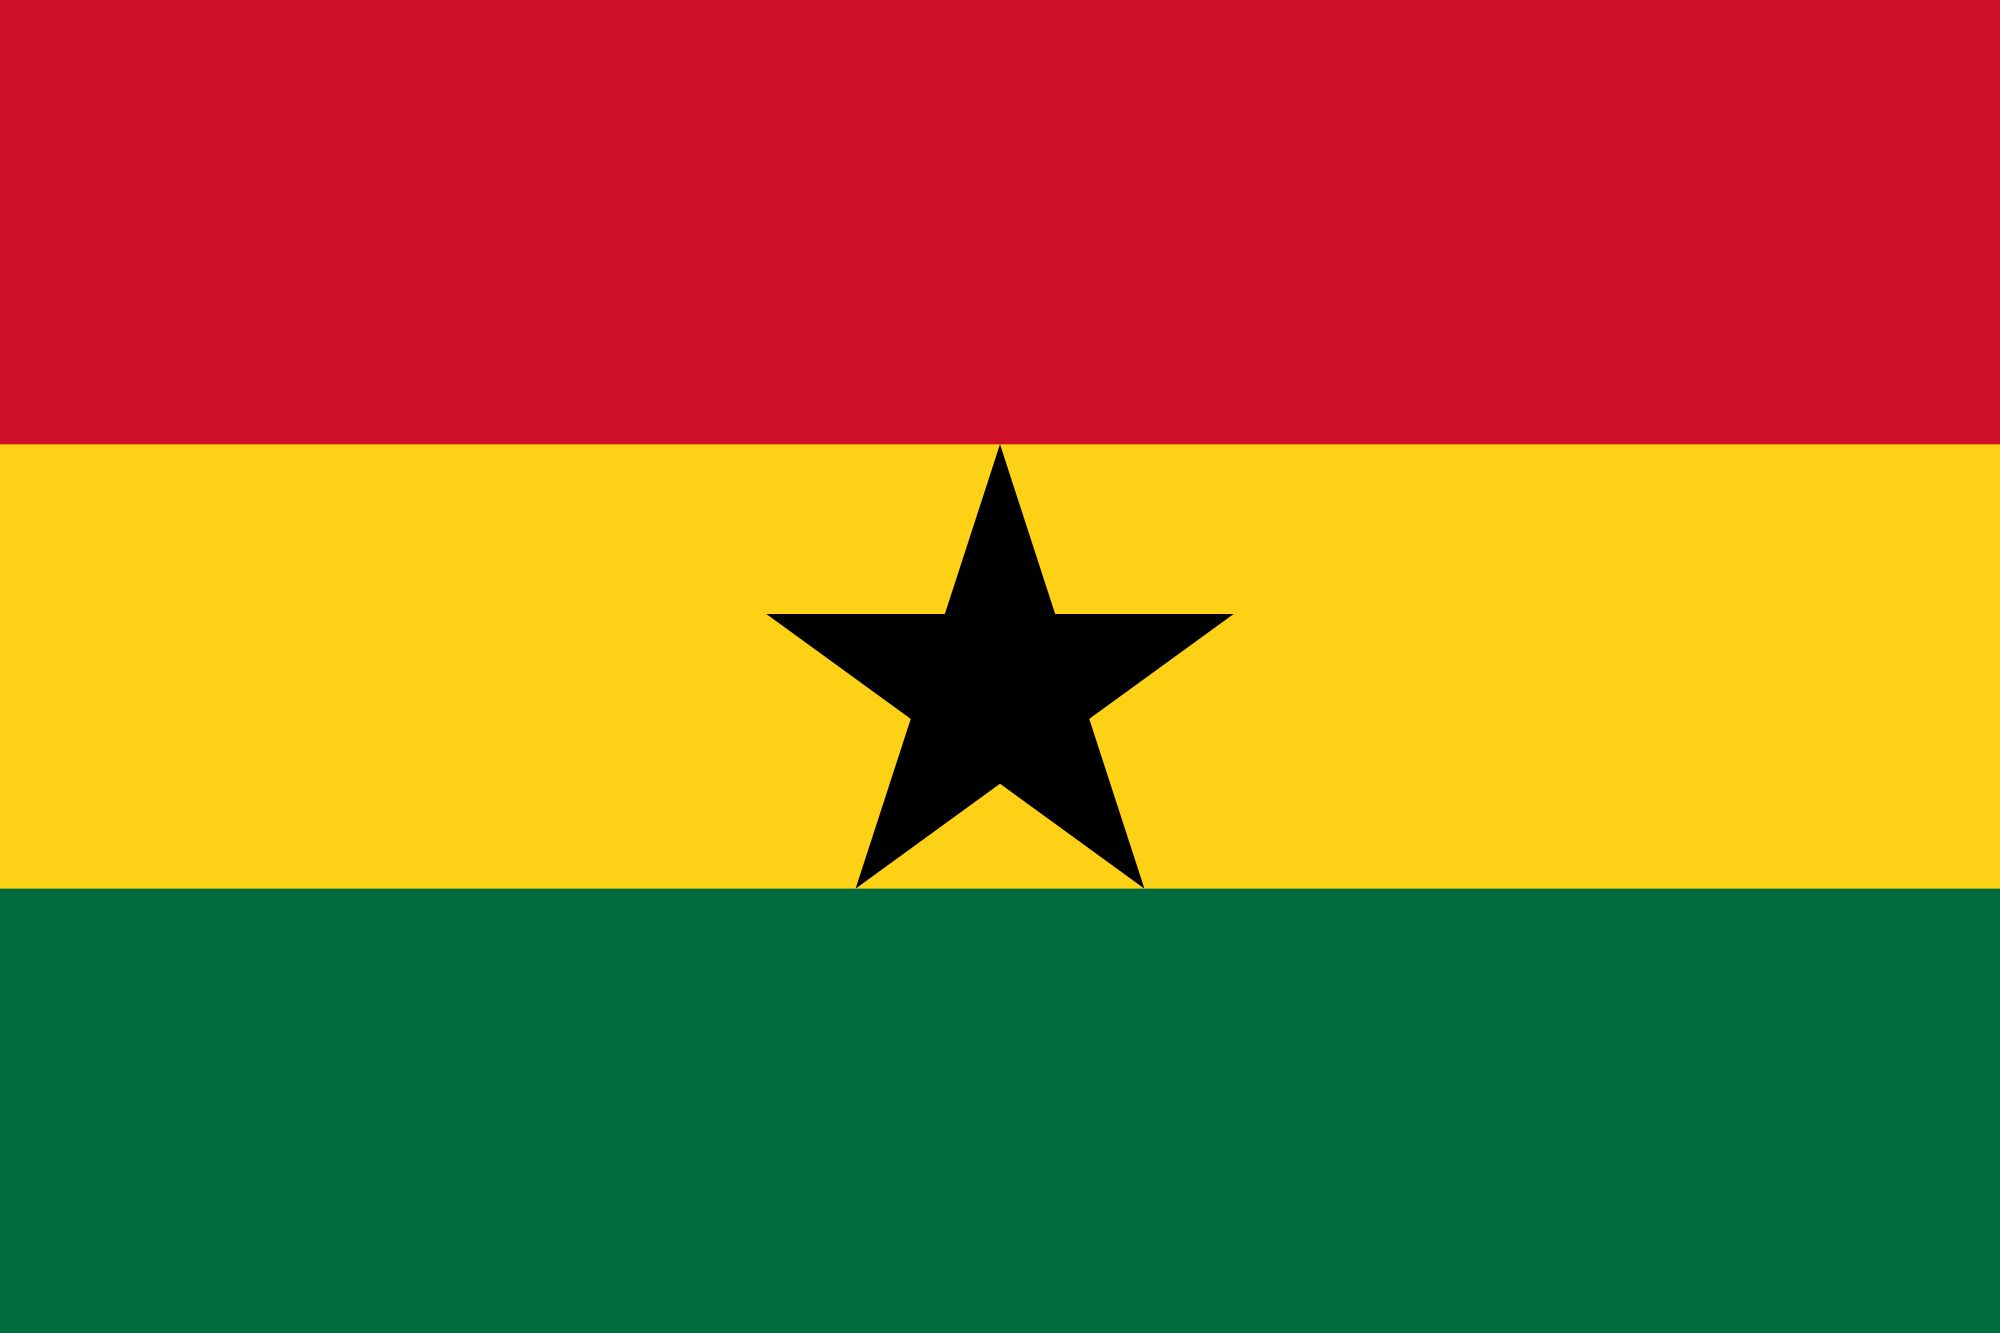 Drapeau Ghana - Le drapeau ghanéen